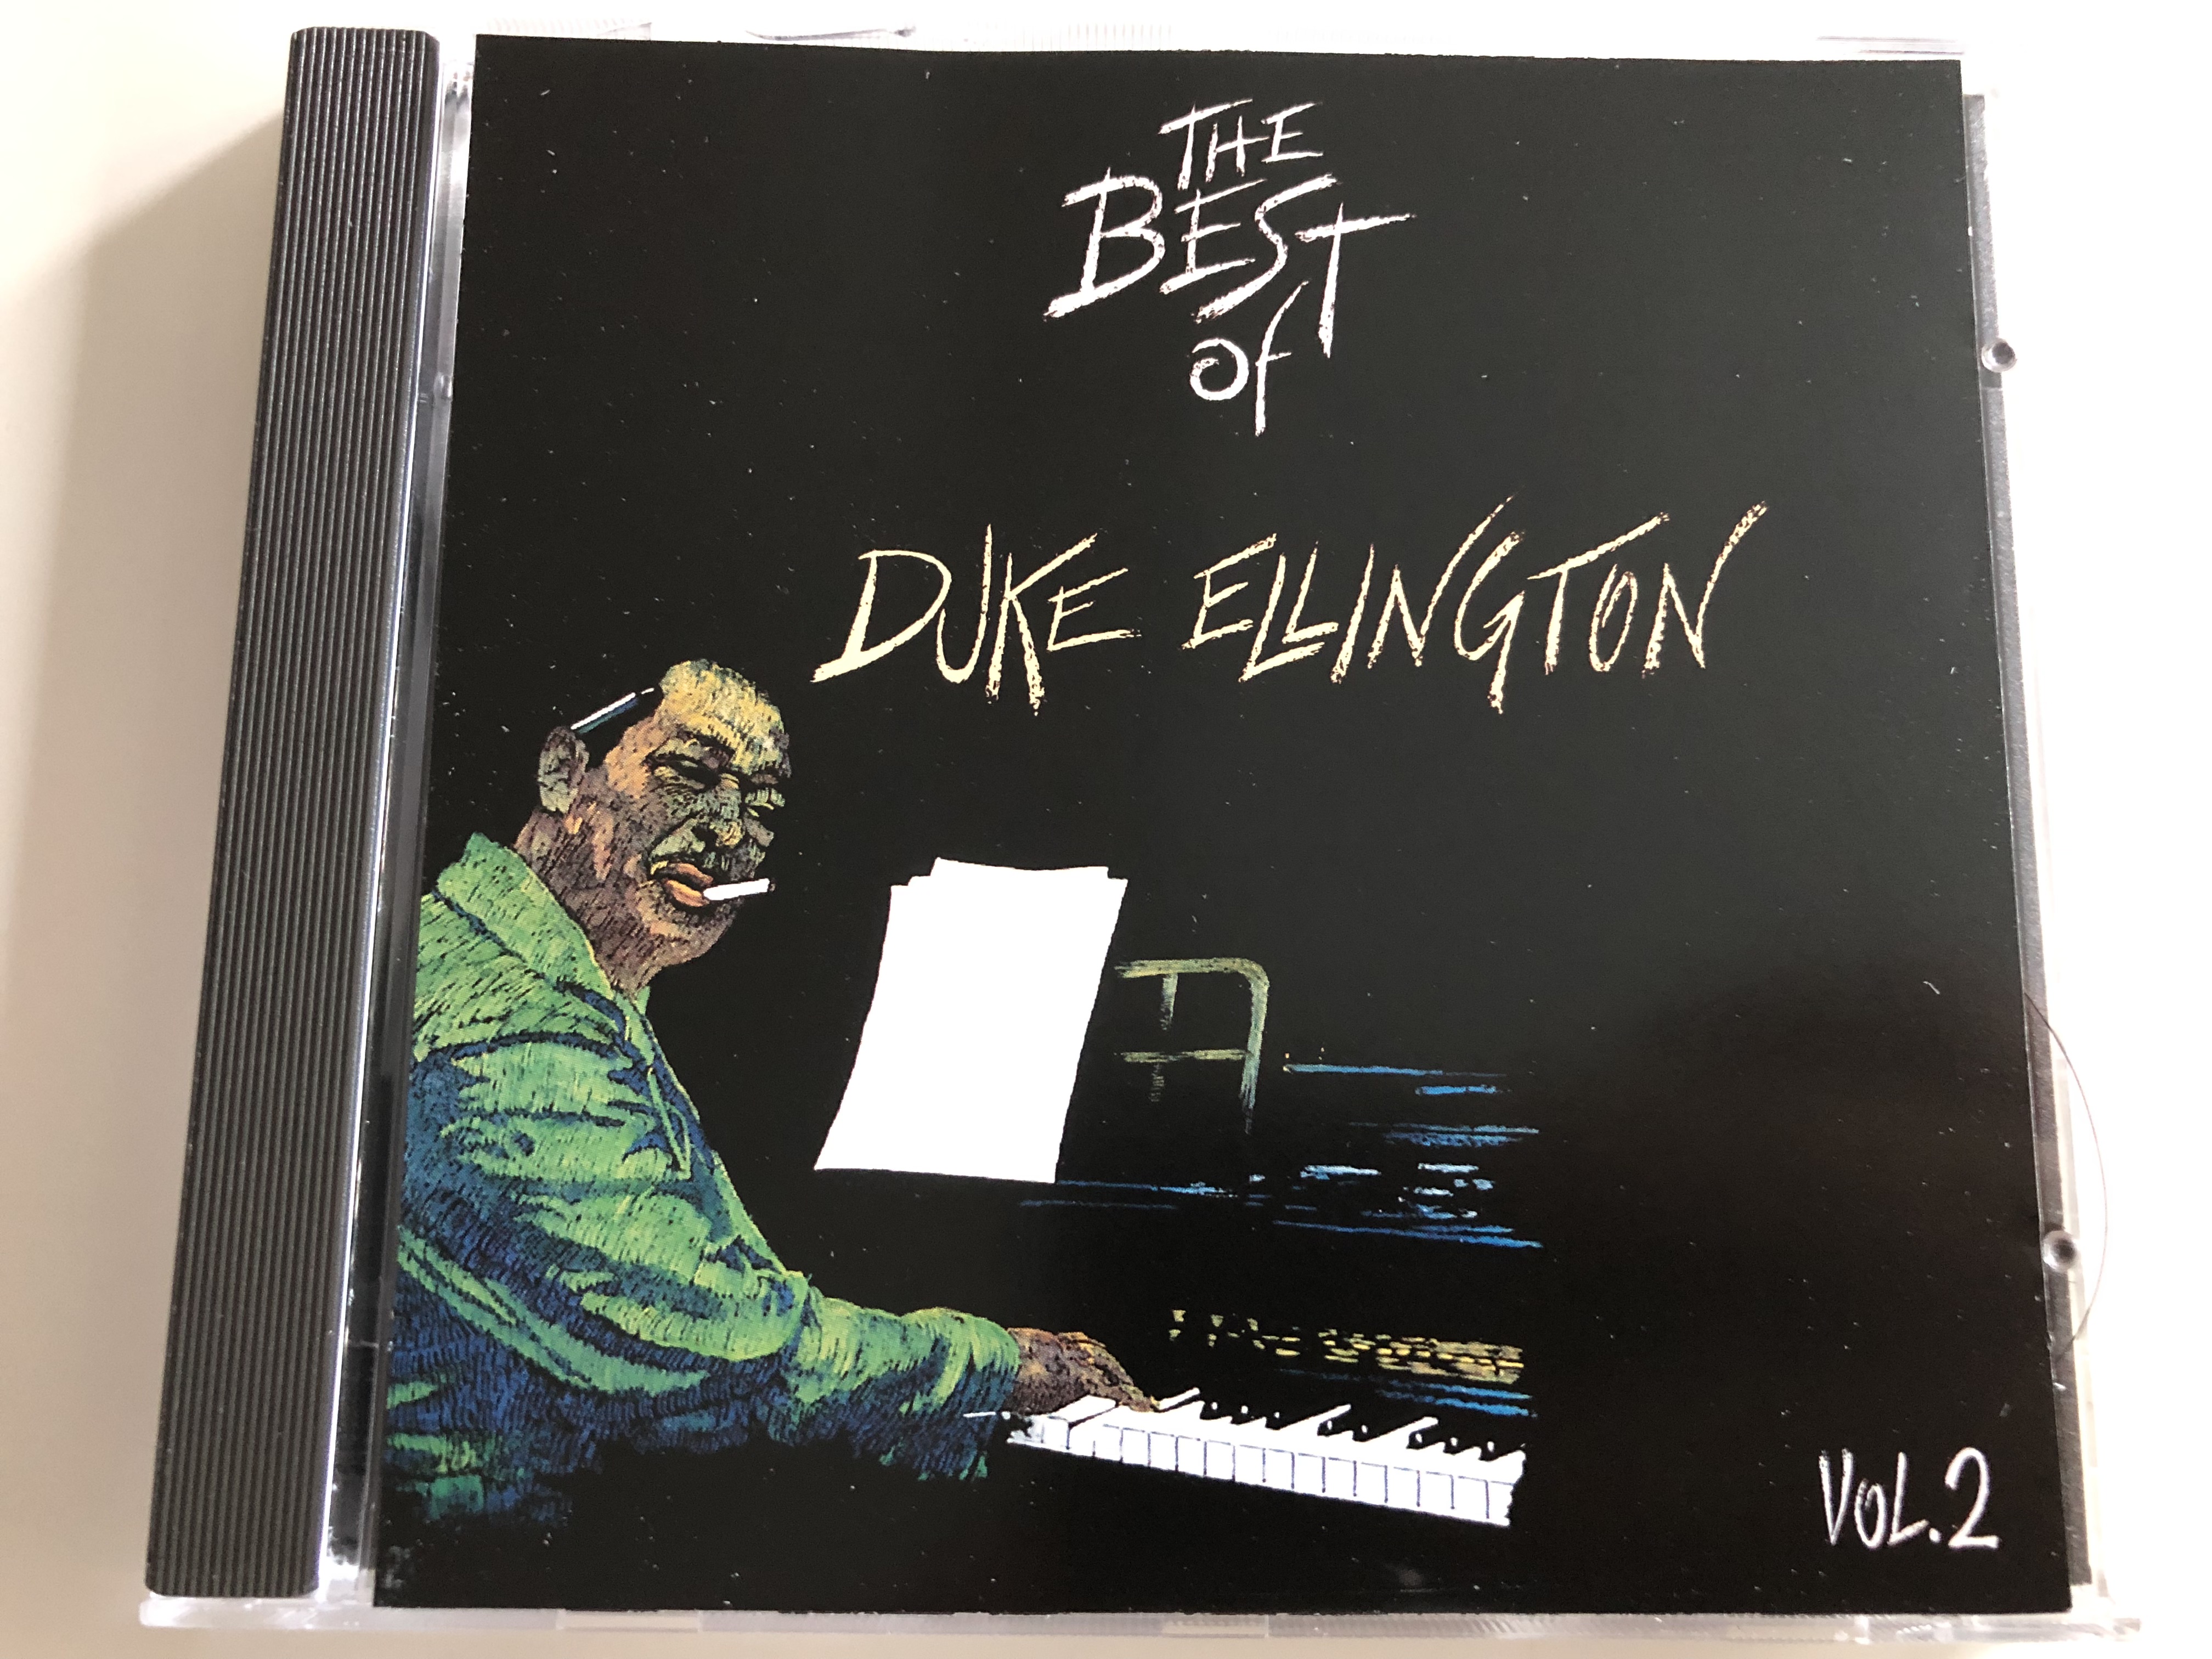 the-best-of-duke-ellington-vol-2.-you-oughta-old-man-river-how-high-the-moon-mood-indigo-perdido-audio-cd-1995-dlcd-4076-1-.jpg